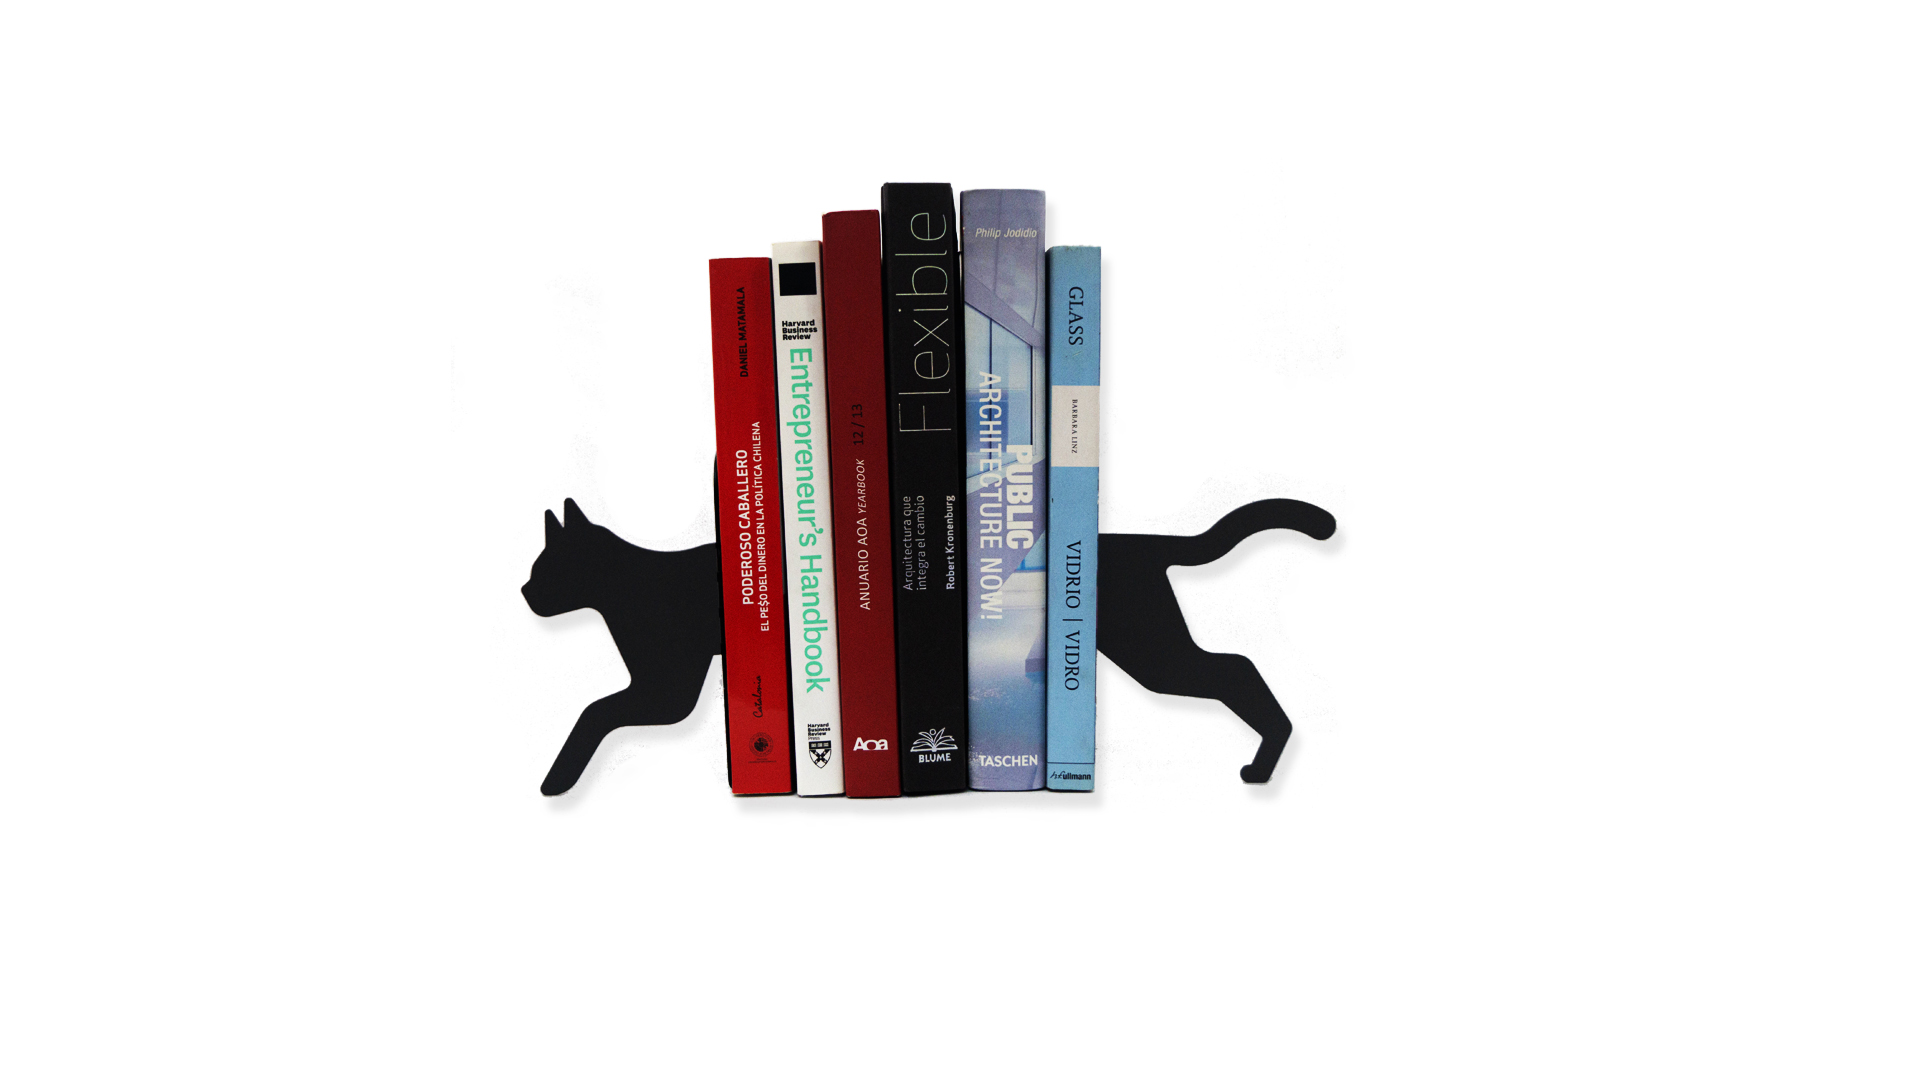 Soporte para Libros / Juegos Gato Organizador Cat Metalico Bookend Librero